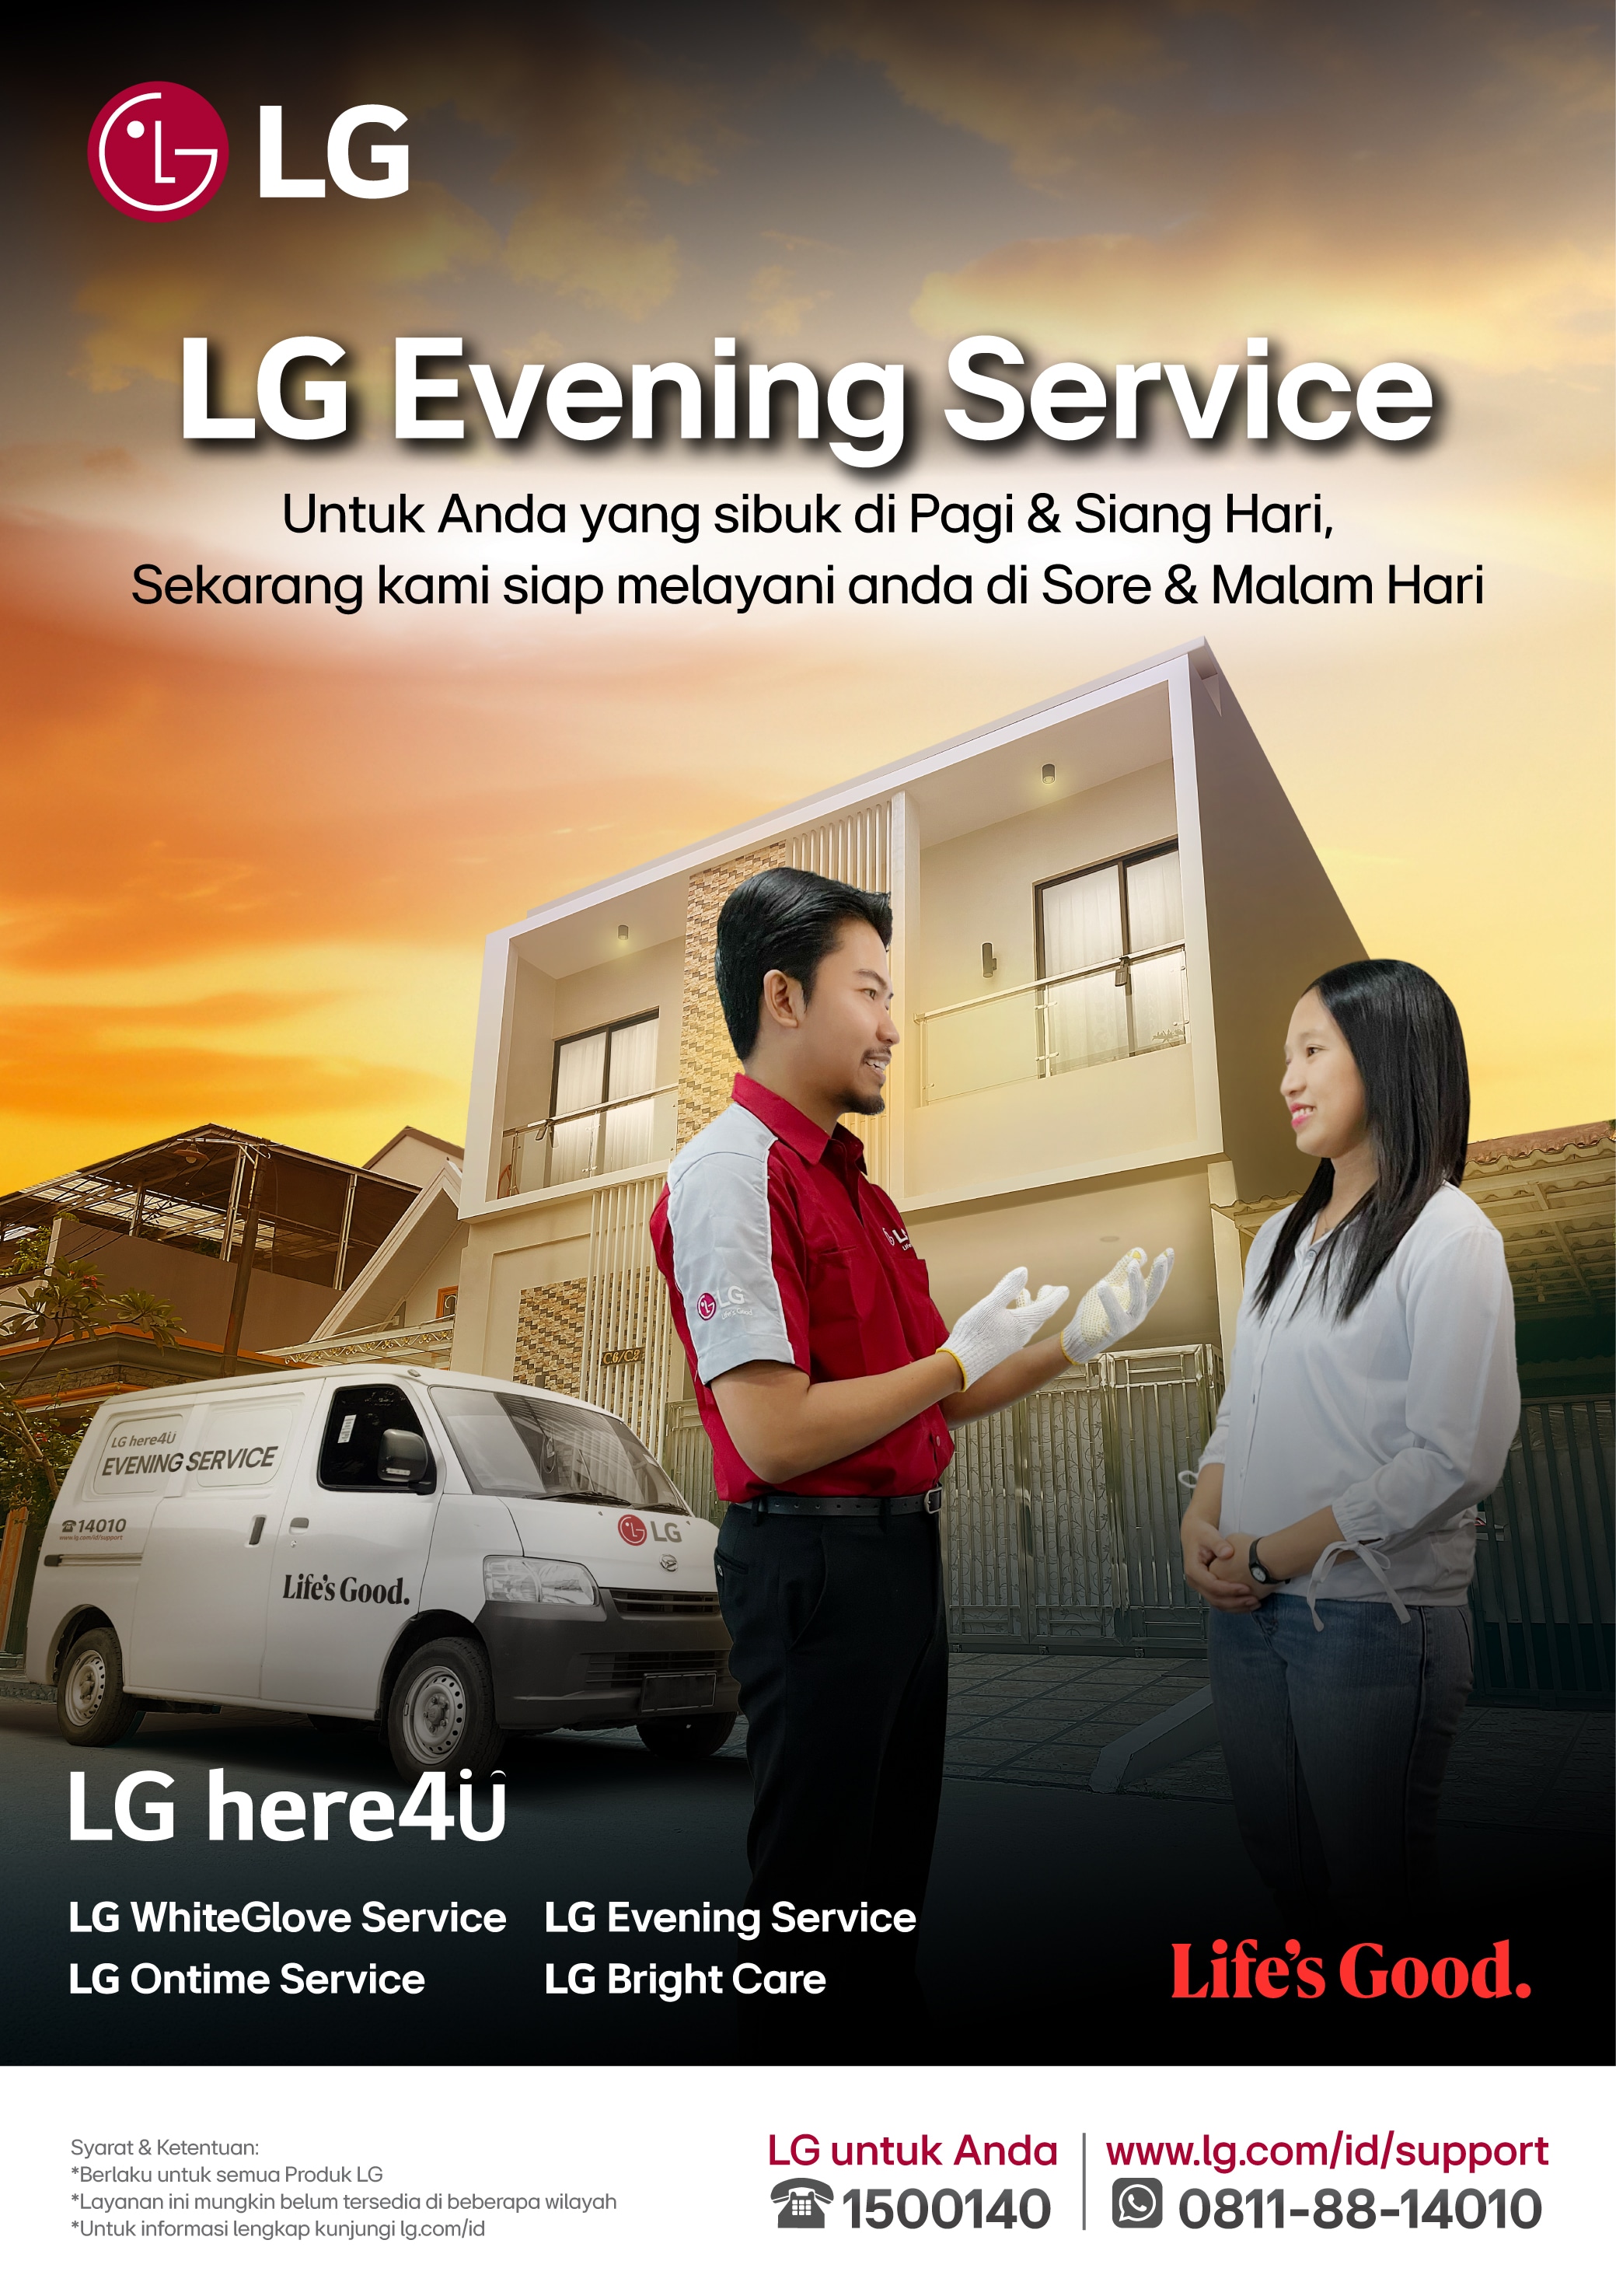 LG Evening Service. Layanan service malam hari